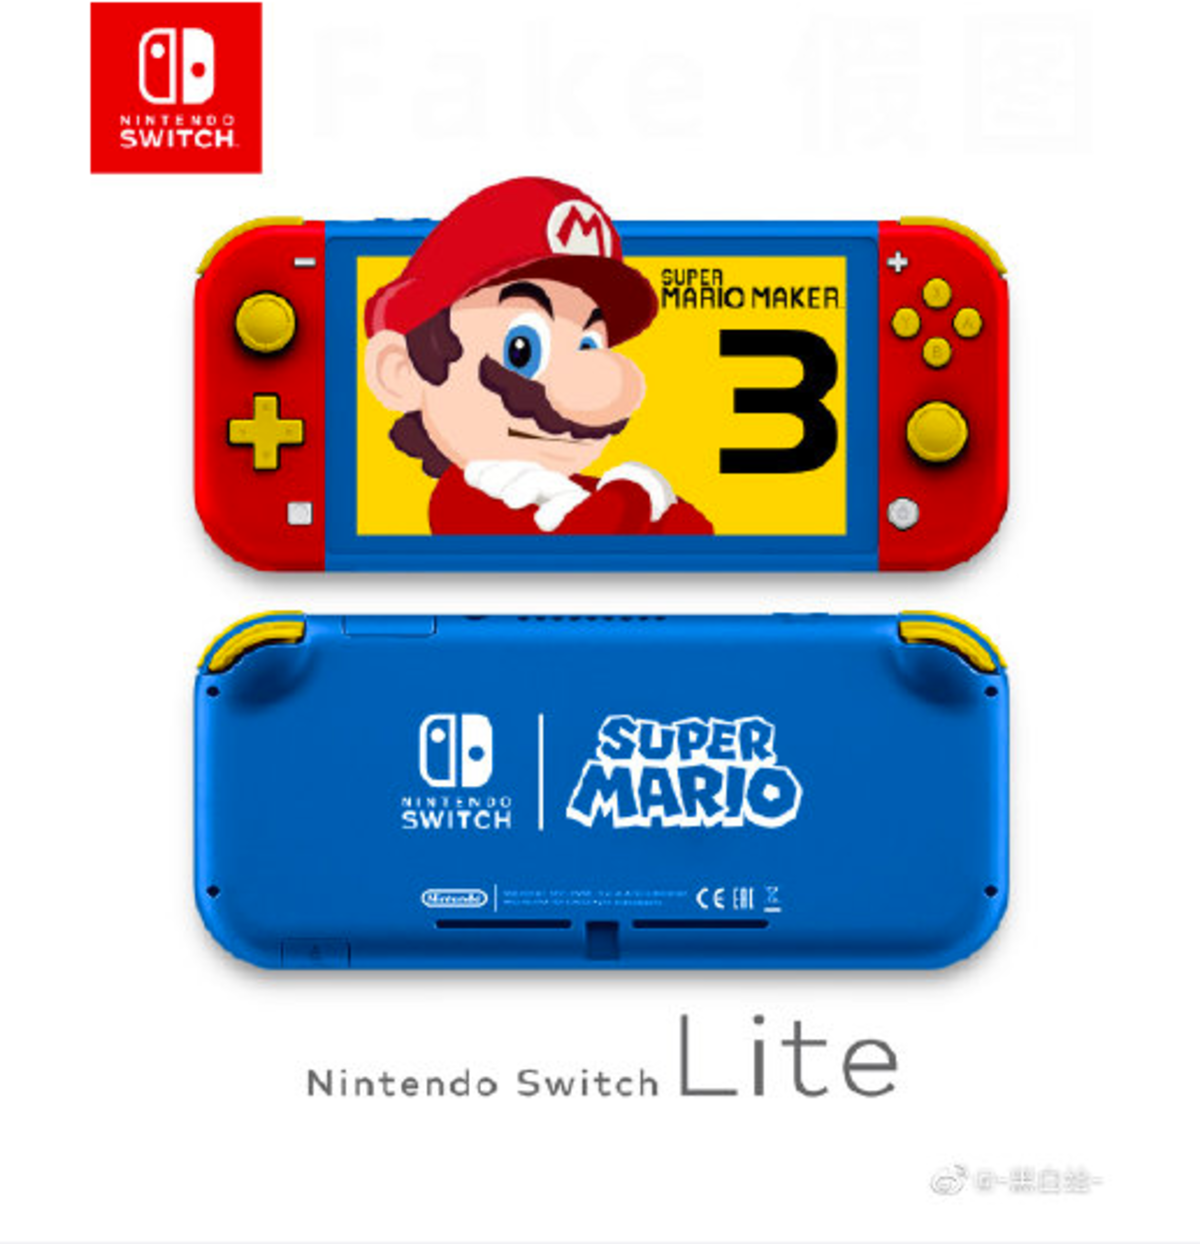 Nintendo Switch Lite design